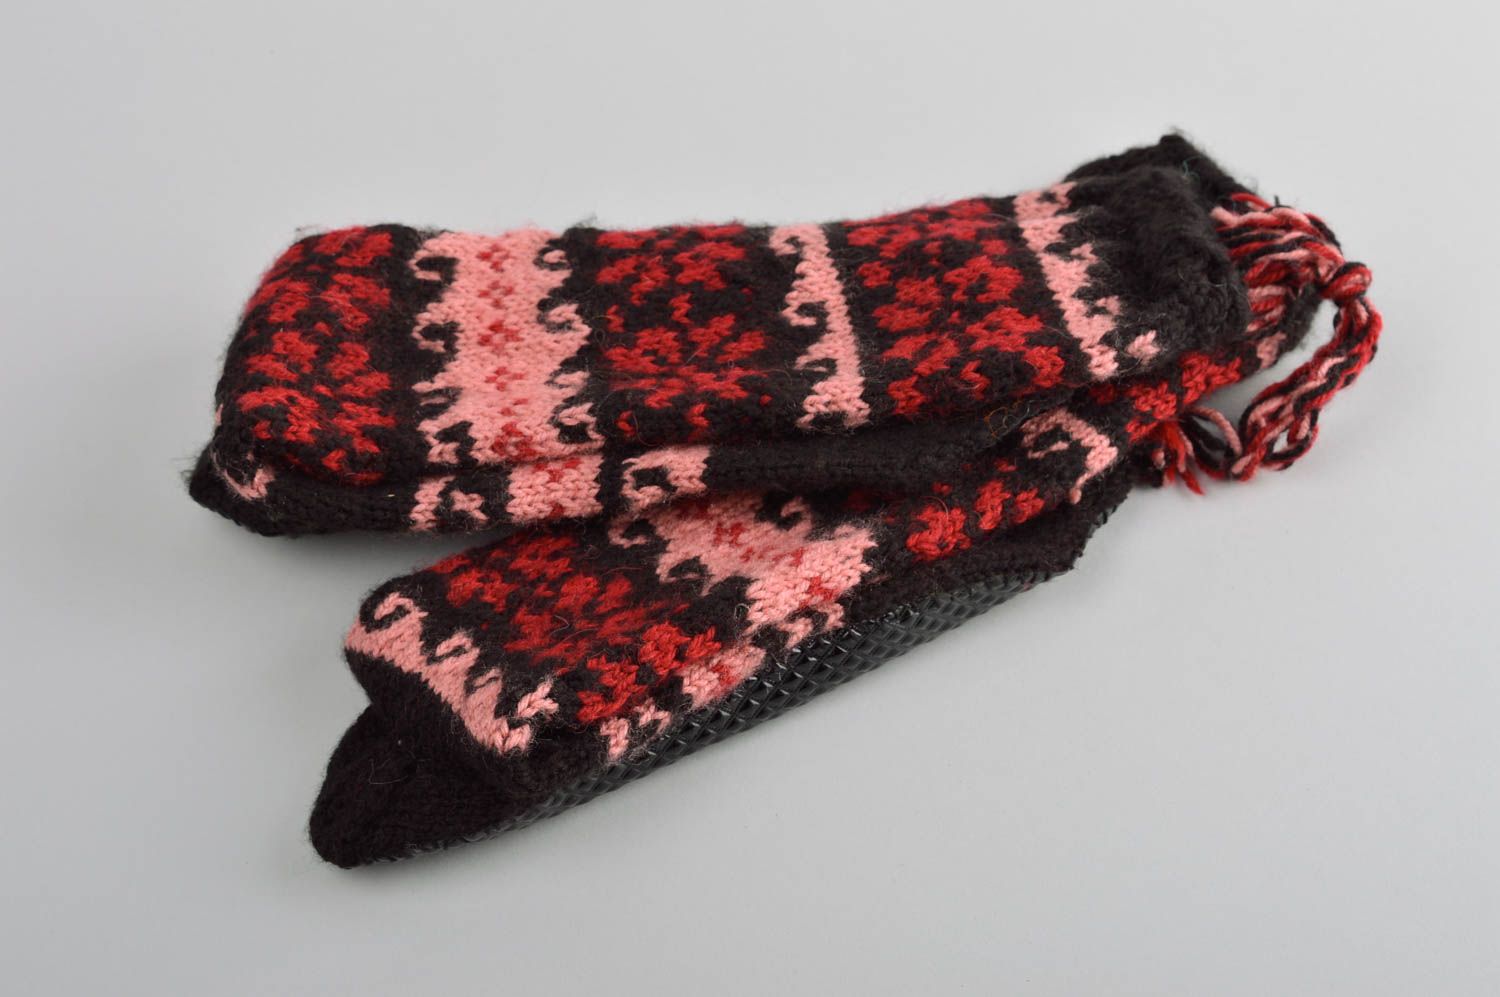 Handmade woolen warm socks unusual winter socks stylish winter accessory photo 5